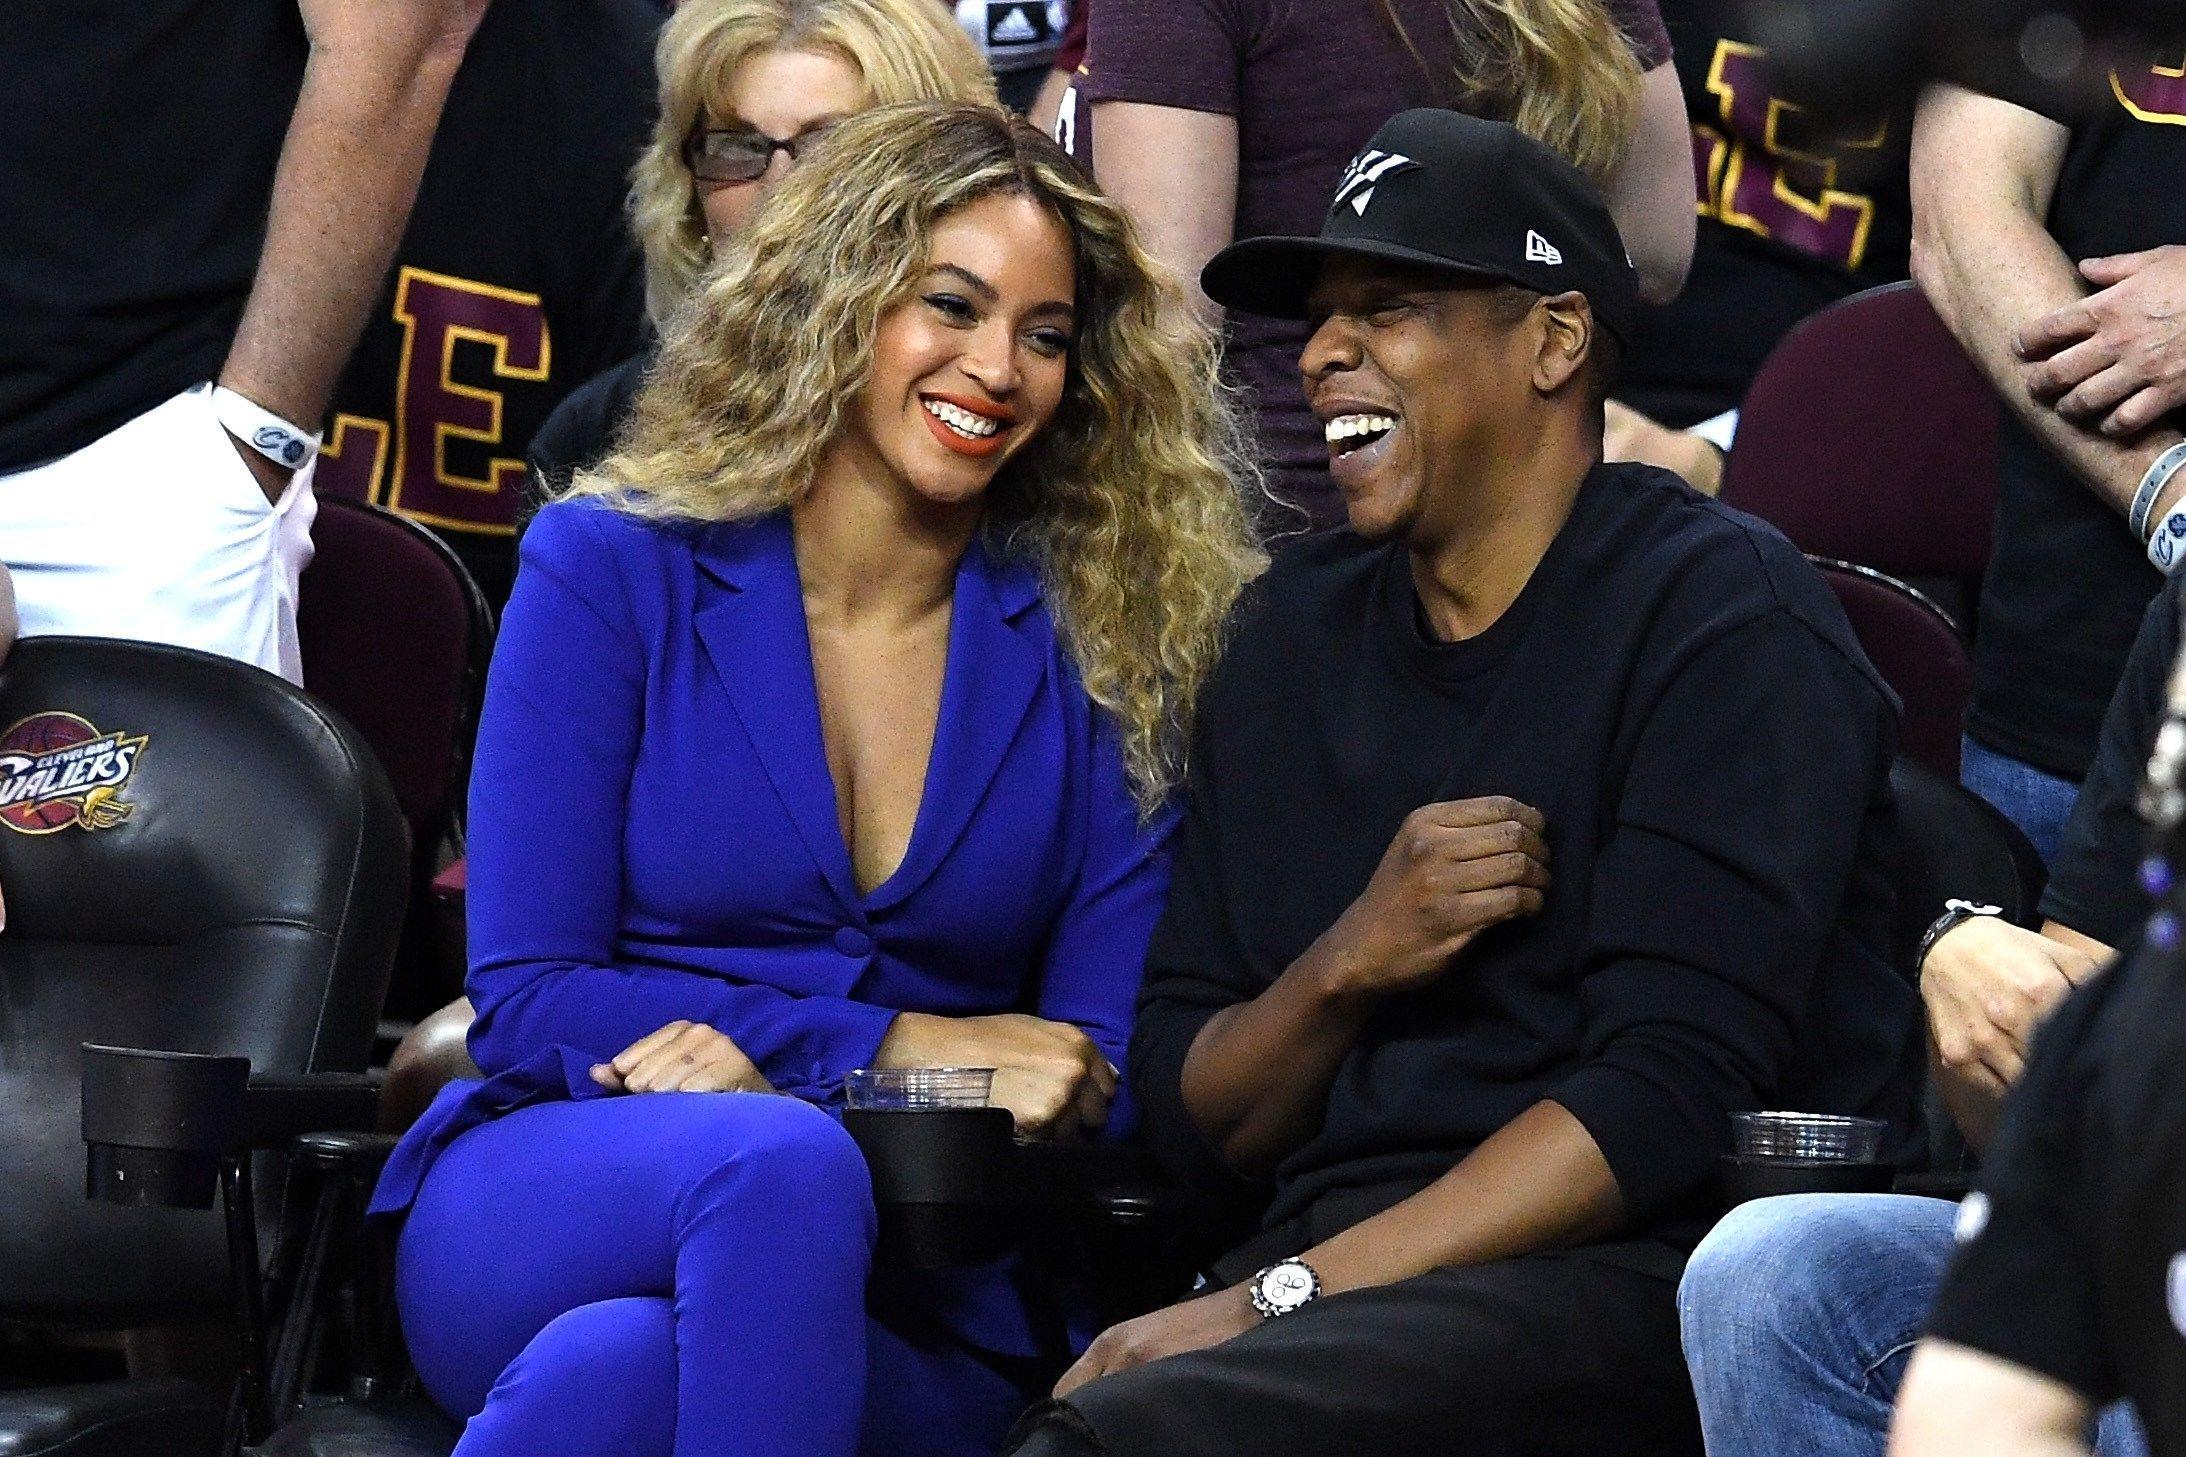 PÅ BASKETKAMP: Beyoncé og Jay Z under NBA-finalen i juni 2016. Beyoncé kledd i powersuit.